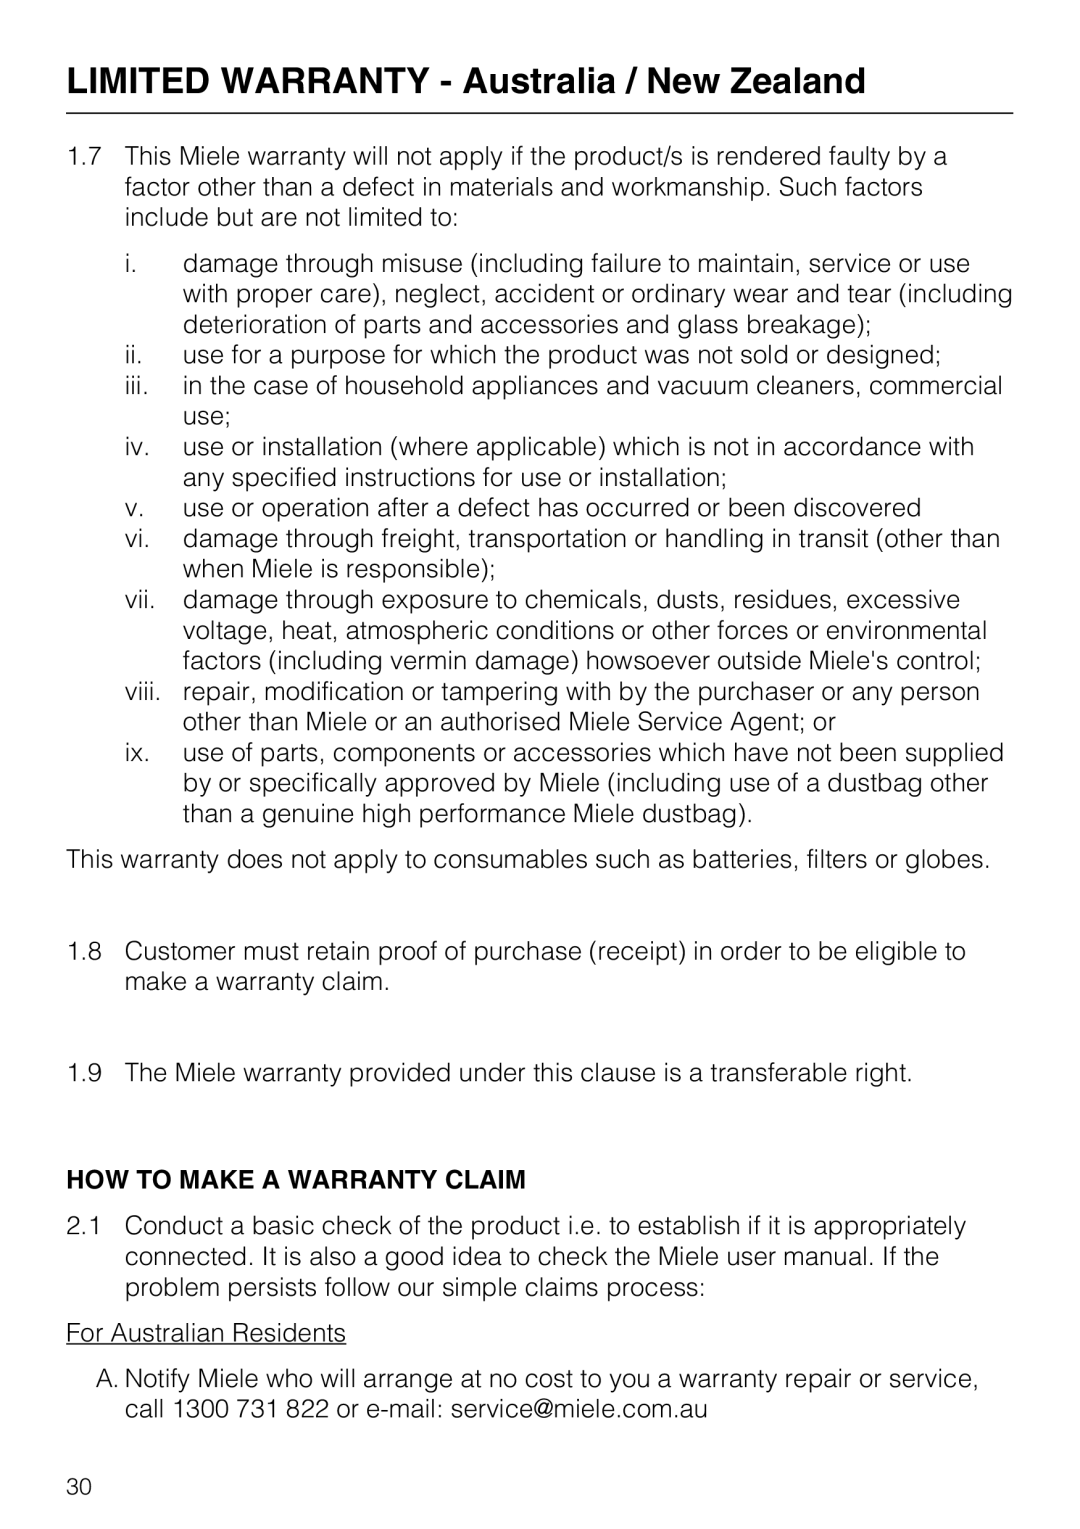 Miele HS17 manual LIMITED WARRANTY - Australia / New Zealand, How To Make A Warranty Claim 